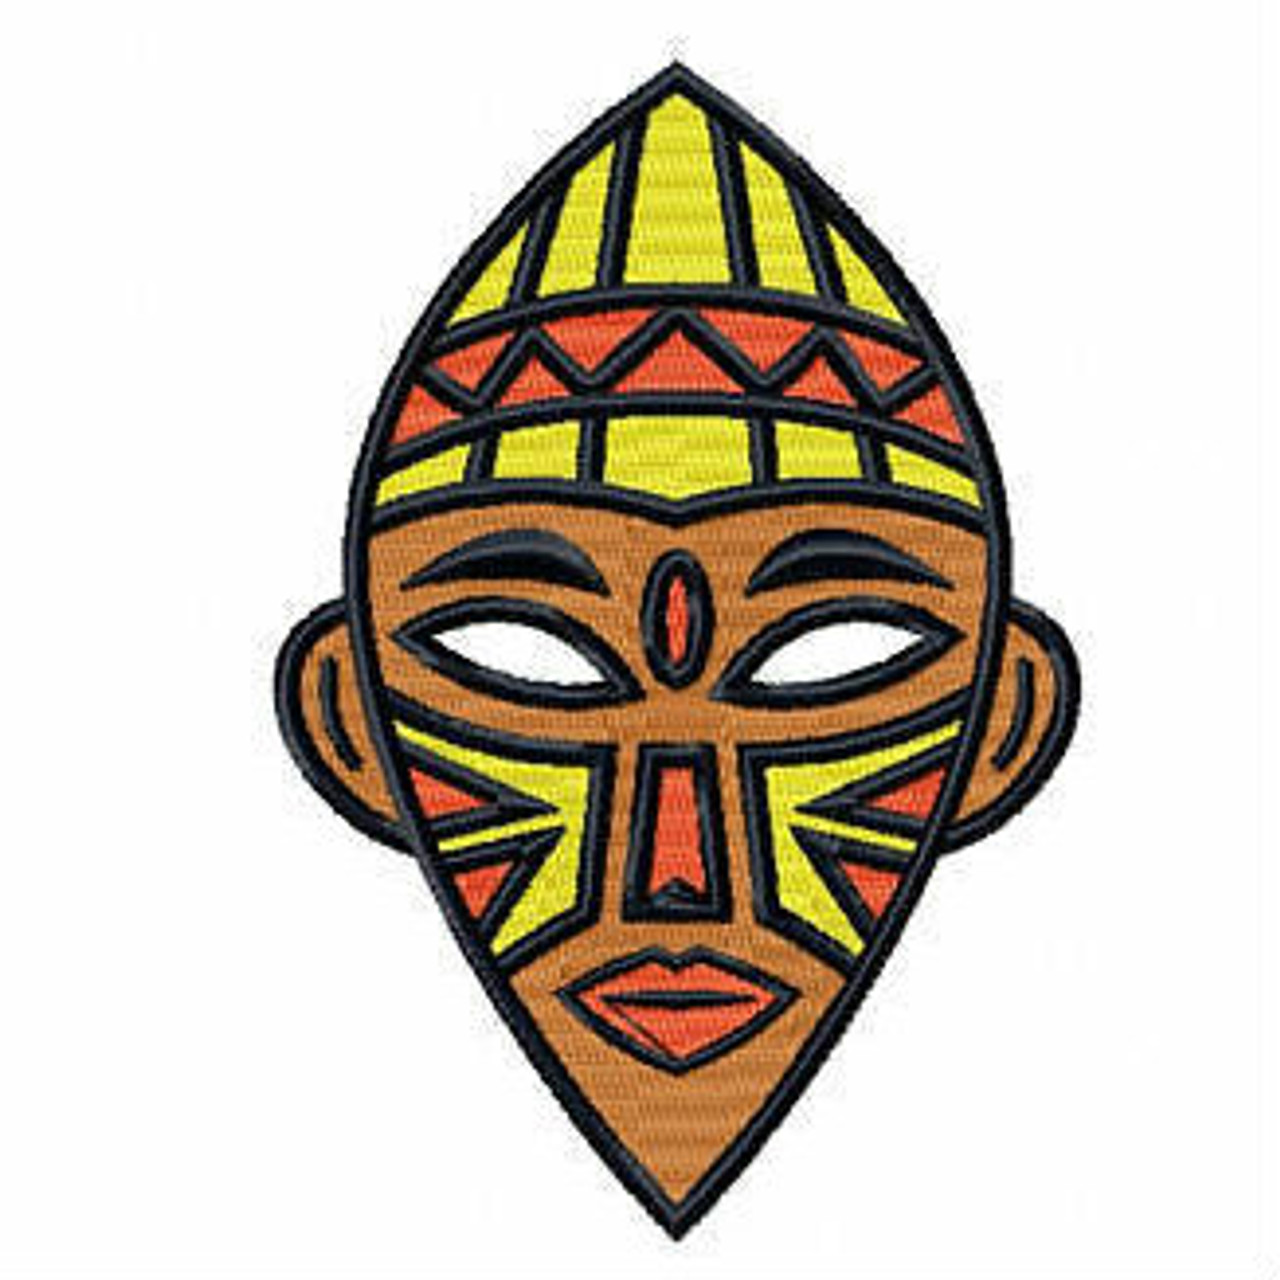 african masks designs drawings